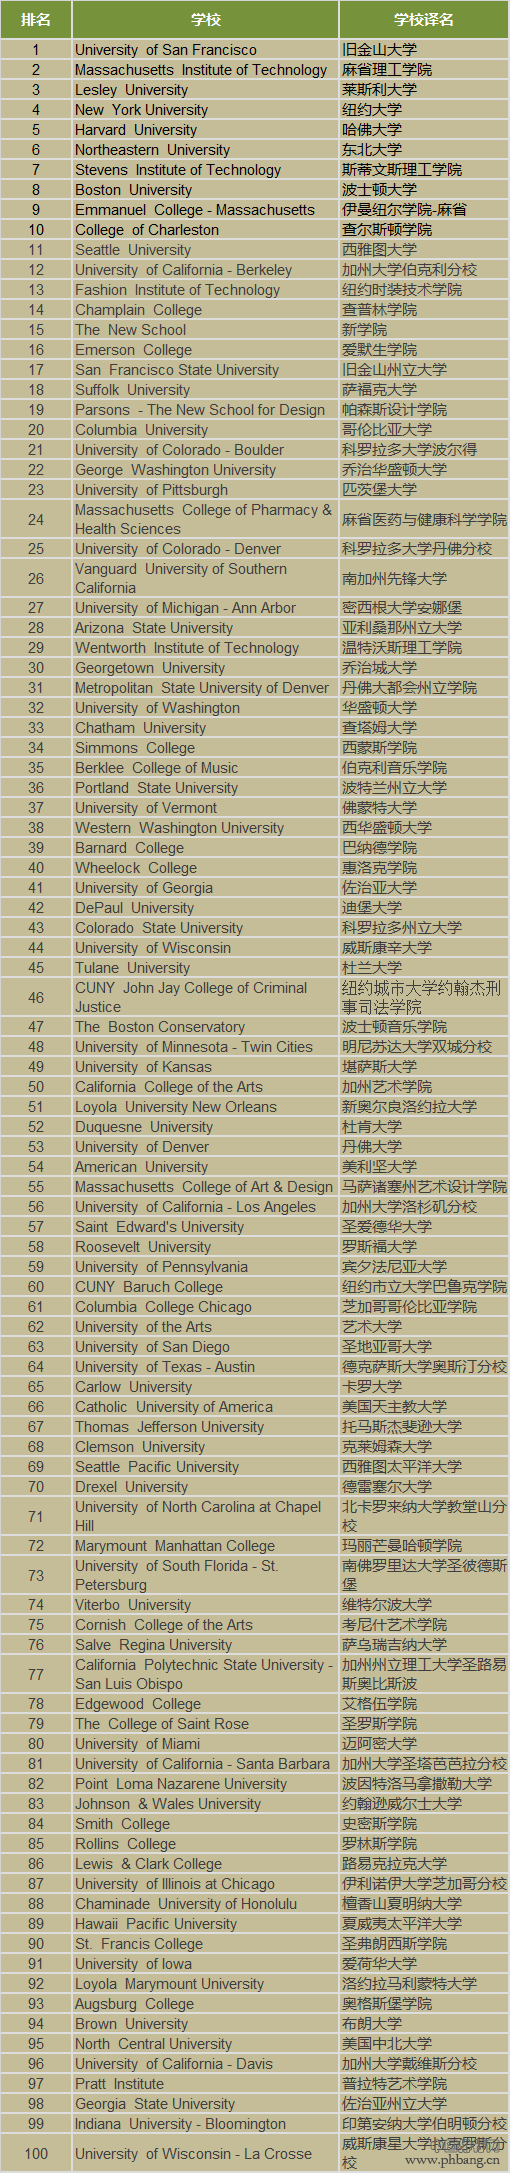 Niche发布2017年美国大学最佳地理位置TOP100